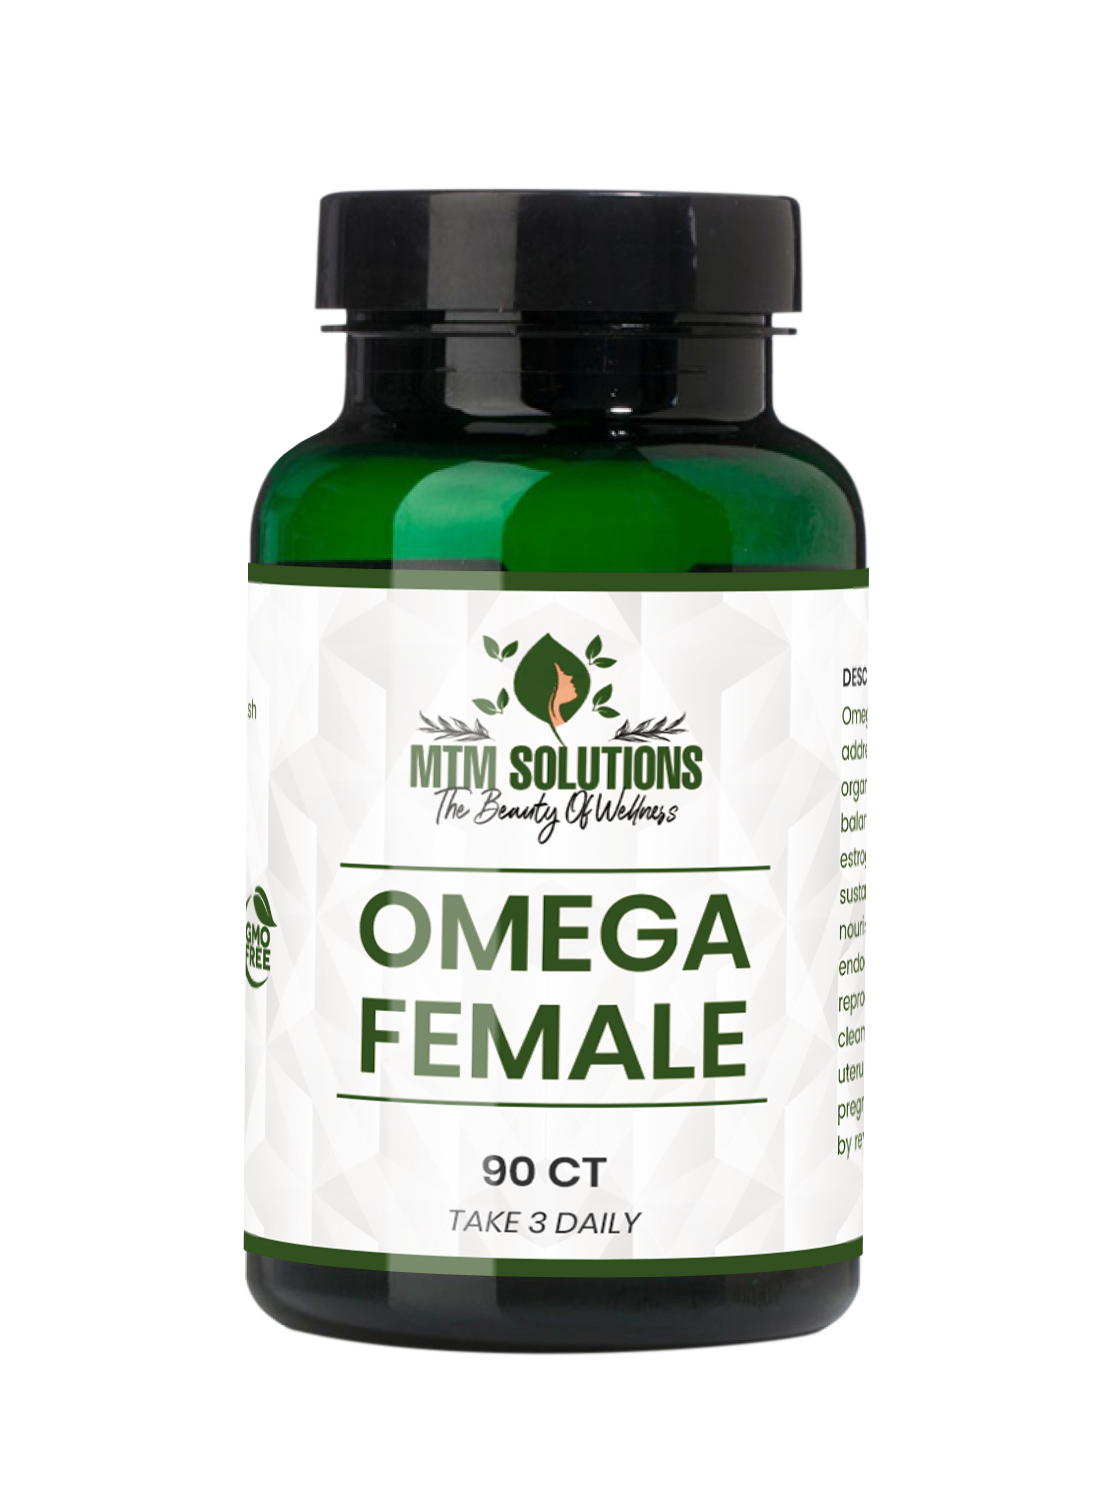 Omega Female tablets